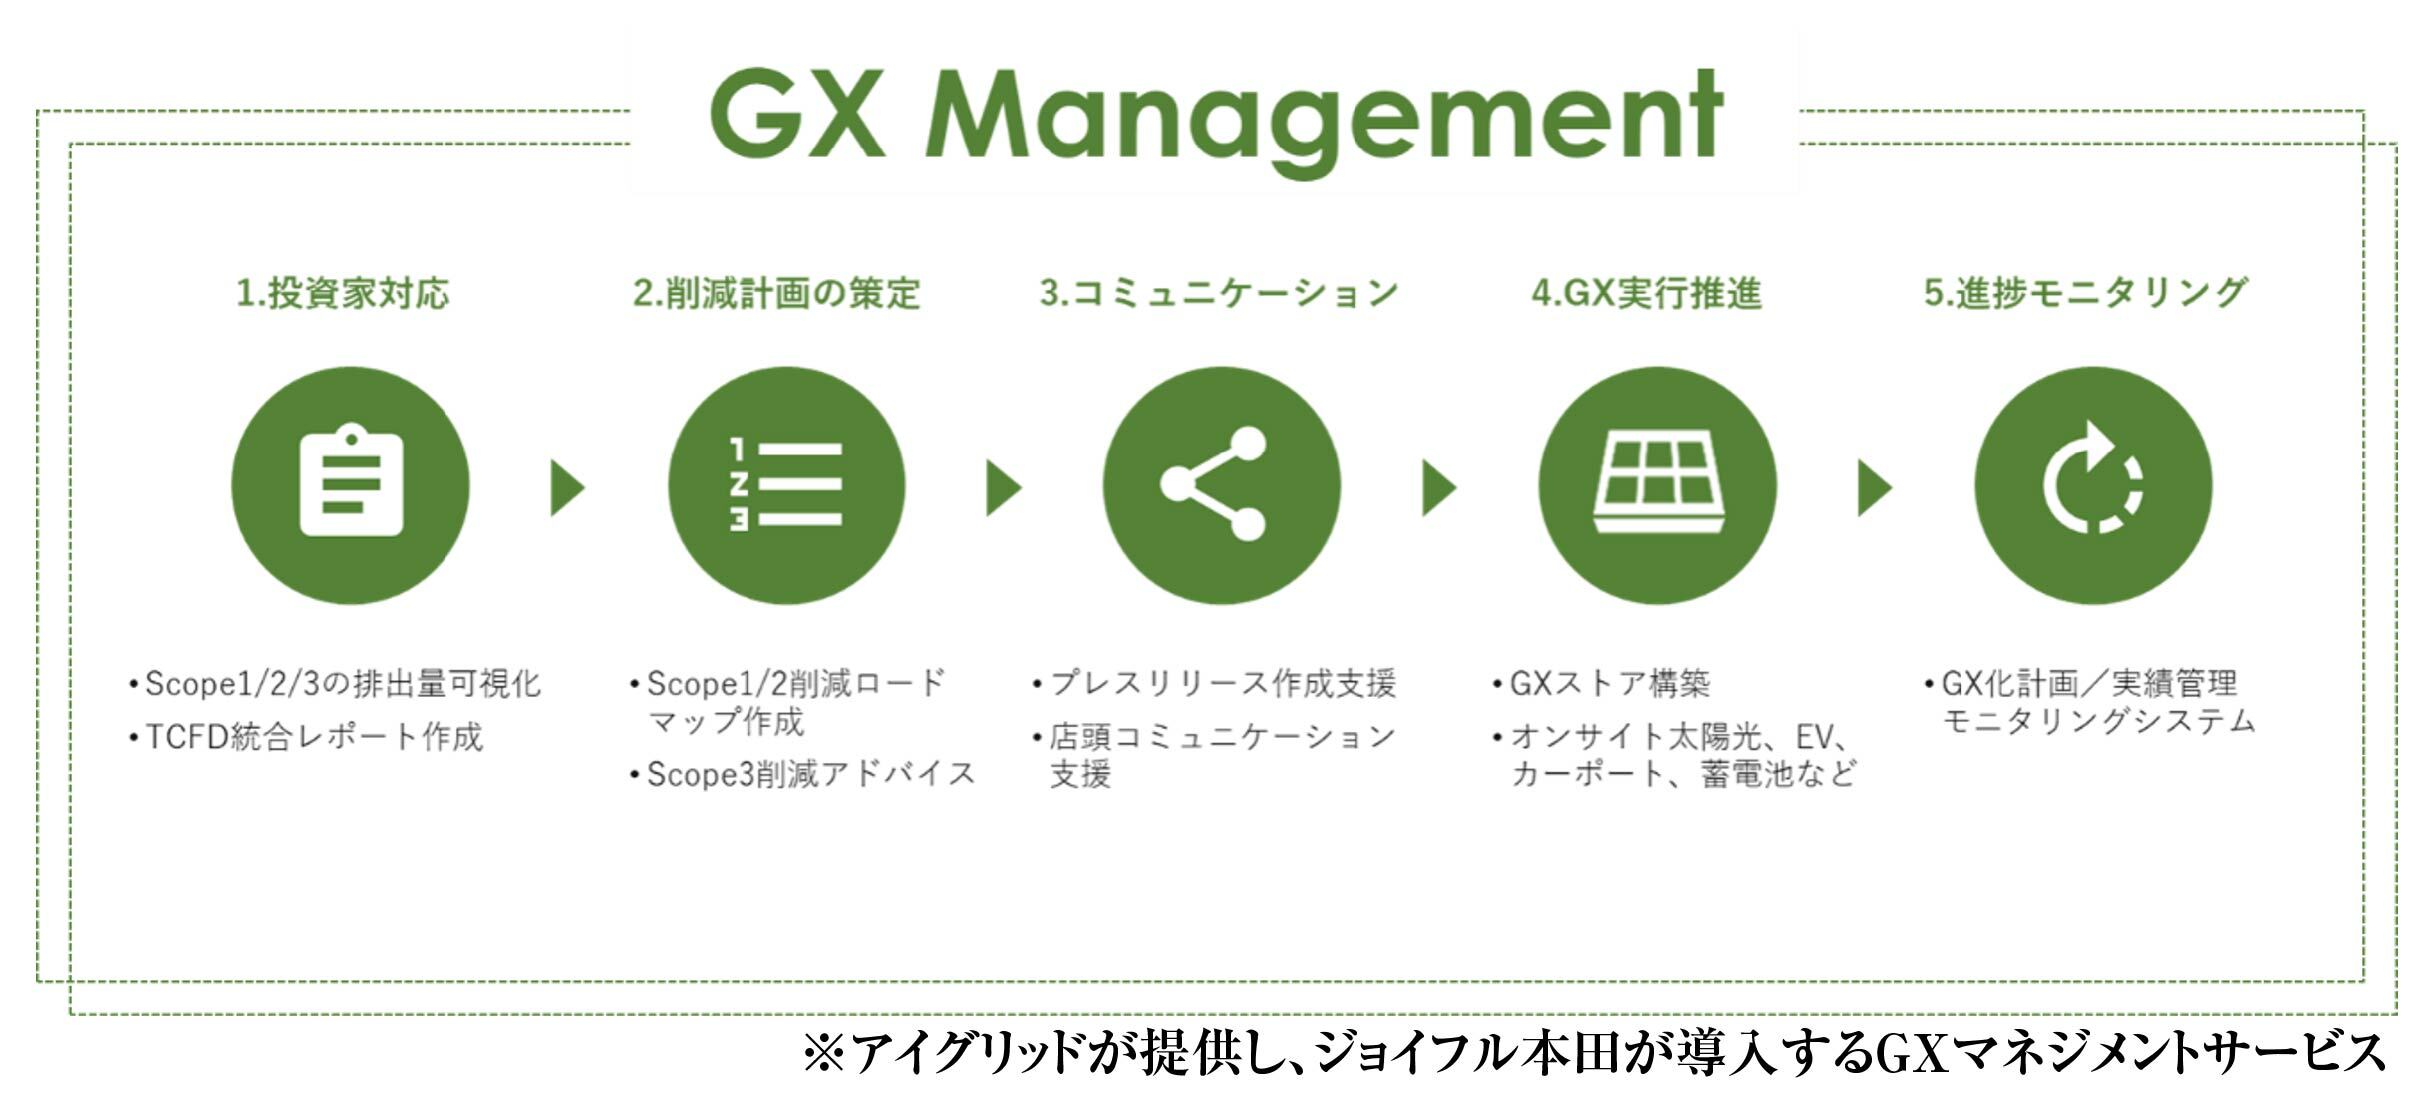 GX Management